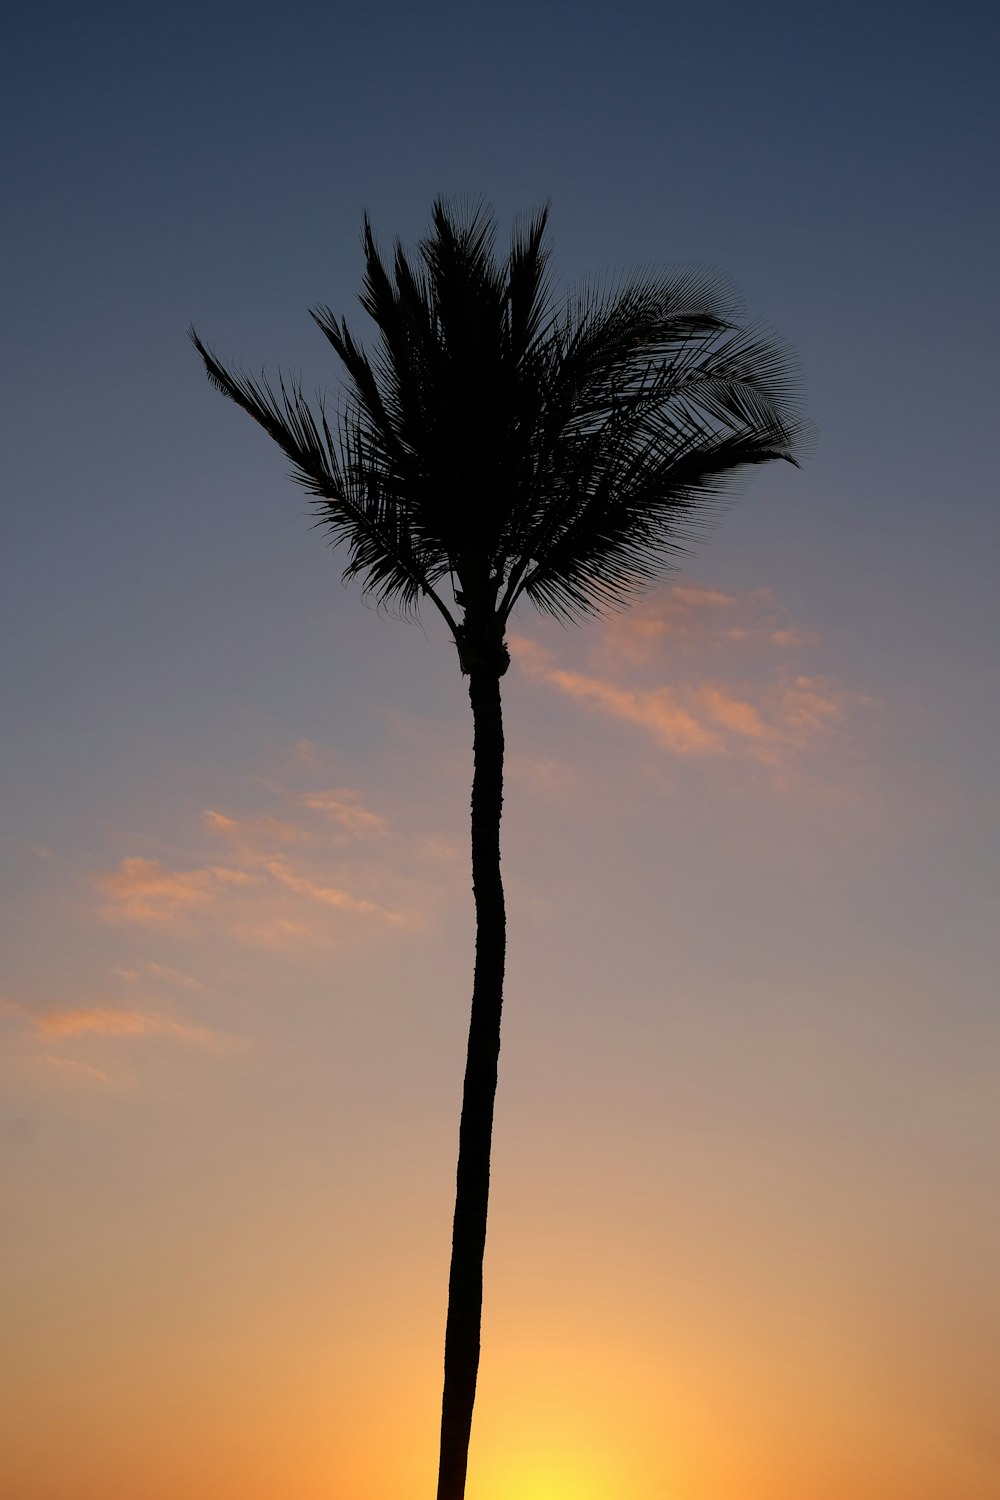 palm tree under orange sky during sunset